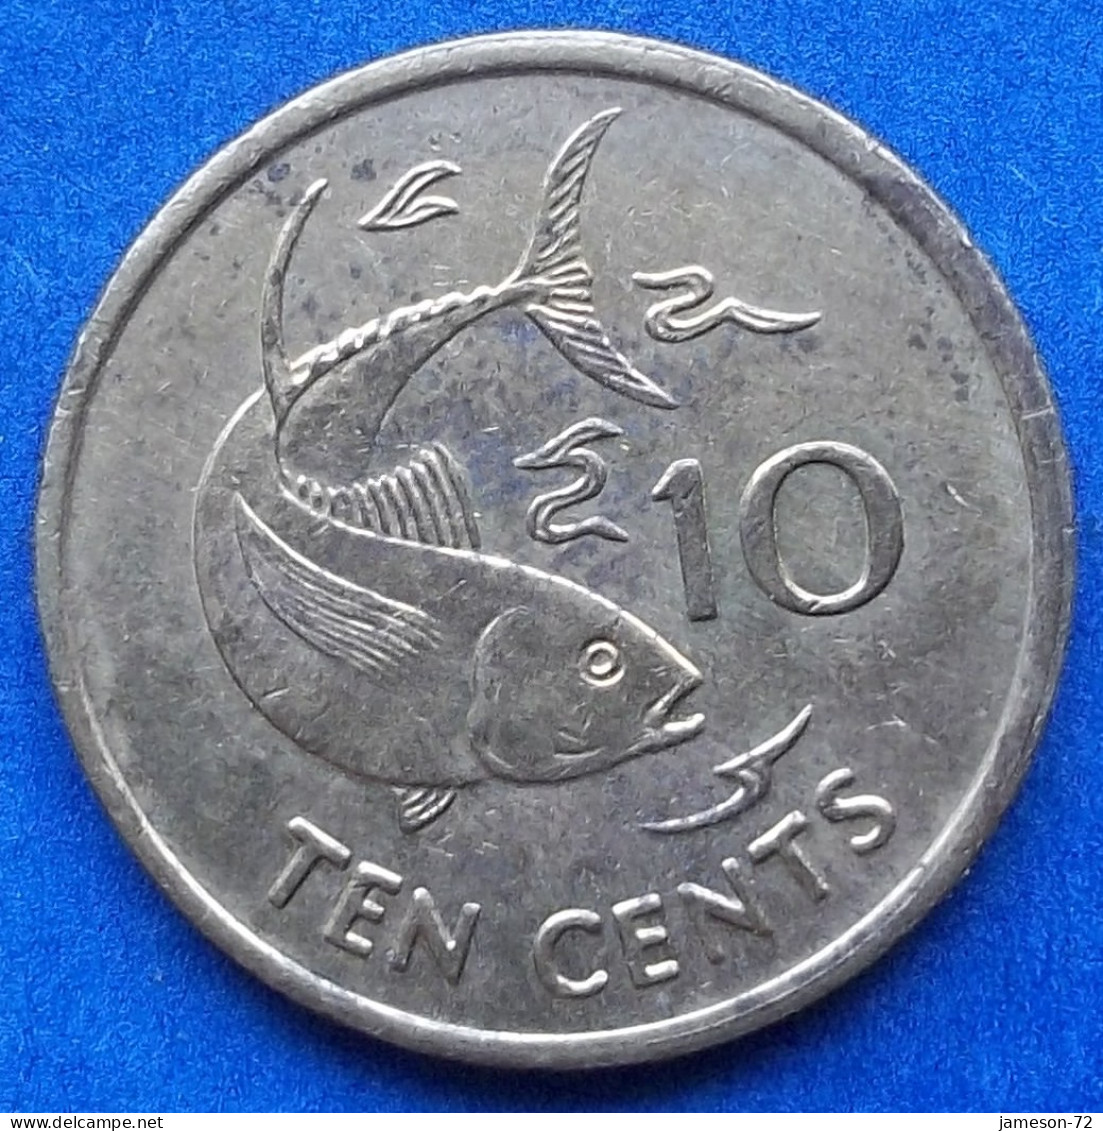 SEYCHELLES - 10 Cents 2003 "Yellowfin Tuna" KM# 48.2 Republic (1976) - Edelweiss Coins - Seychelles